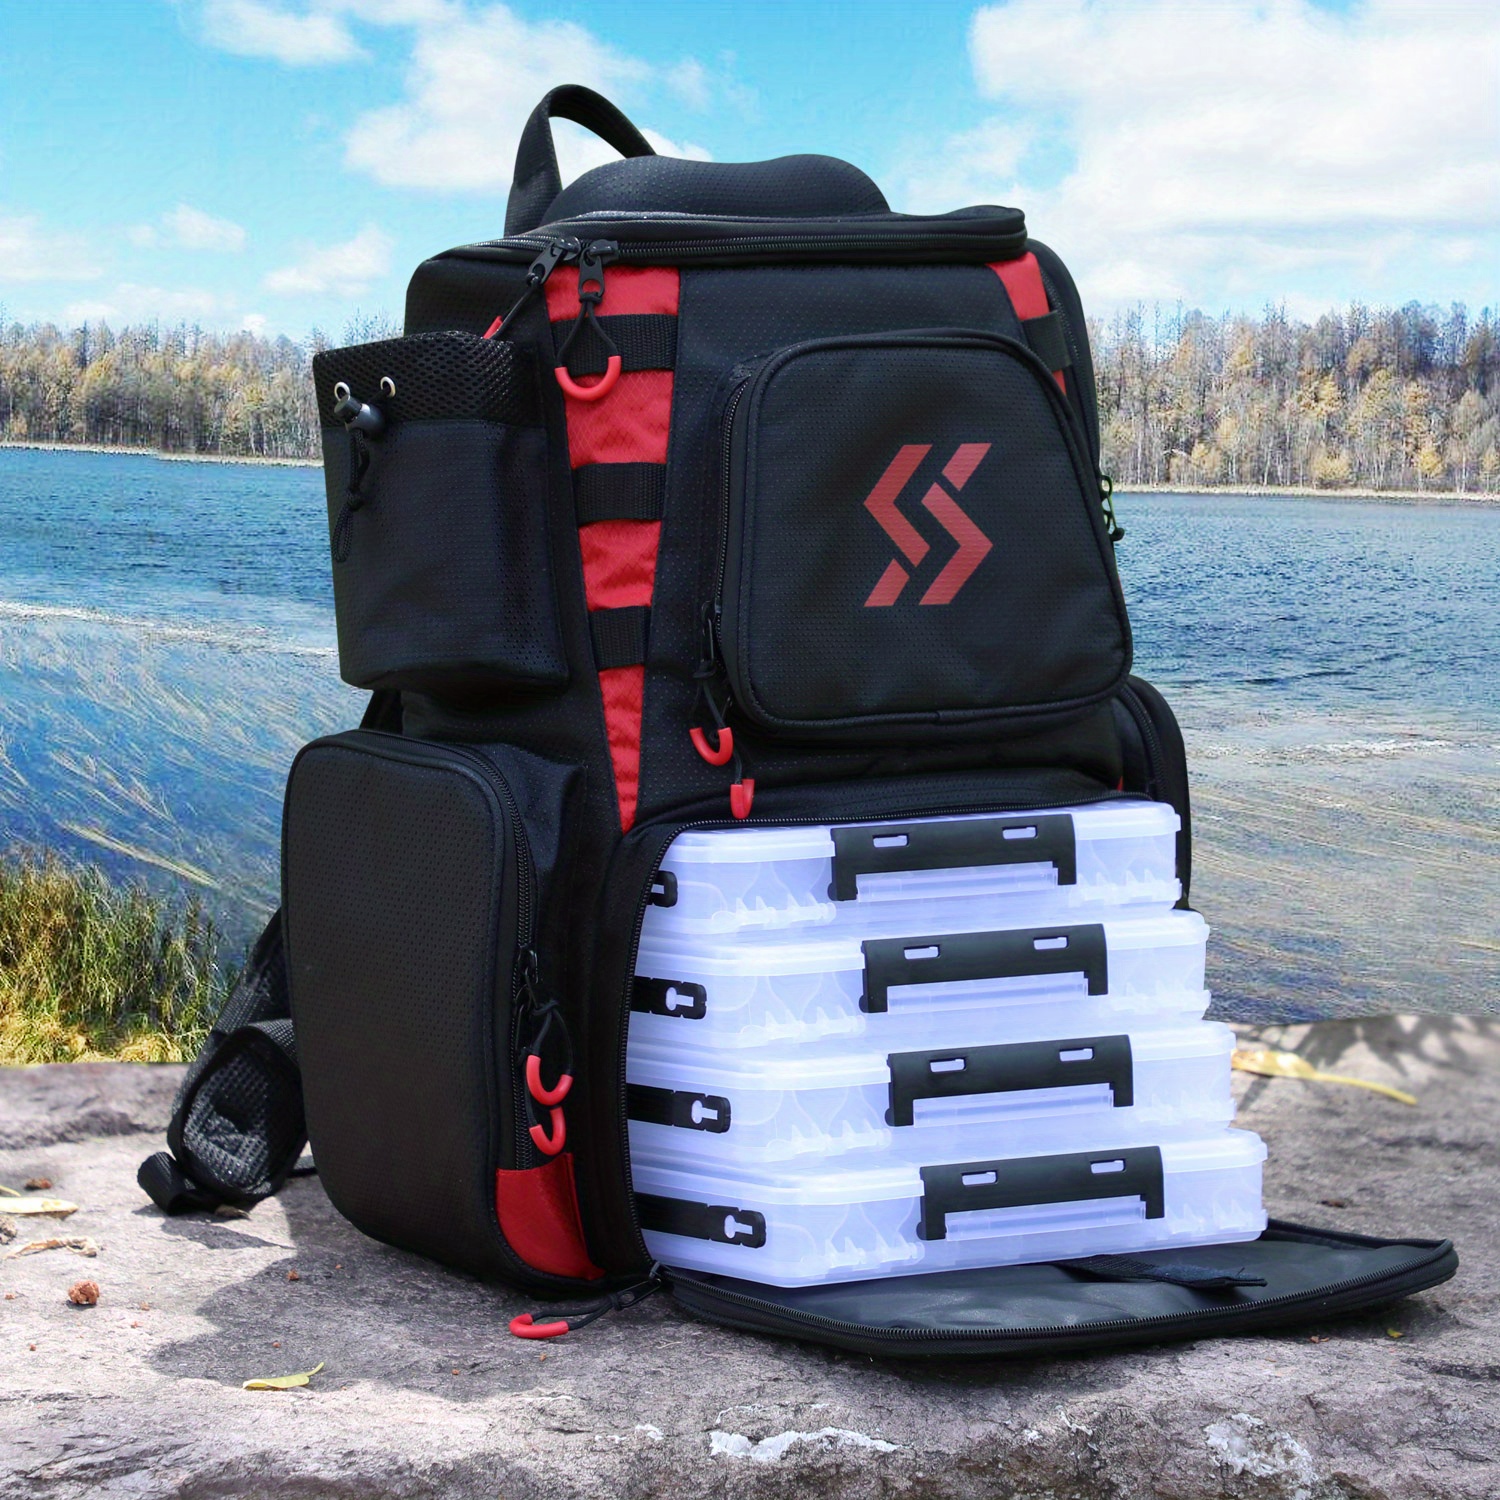 Sougayilang Fishing Tackle Backpack Waterproof Tackle Bag Storage With  Trays Tackle Box And Protective Rain Cover For Camping Hiking, Maxx Pack Backpack  Tackle Bag